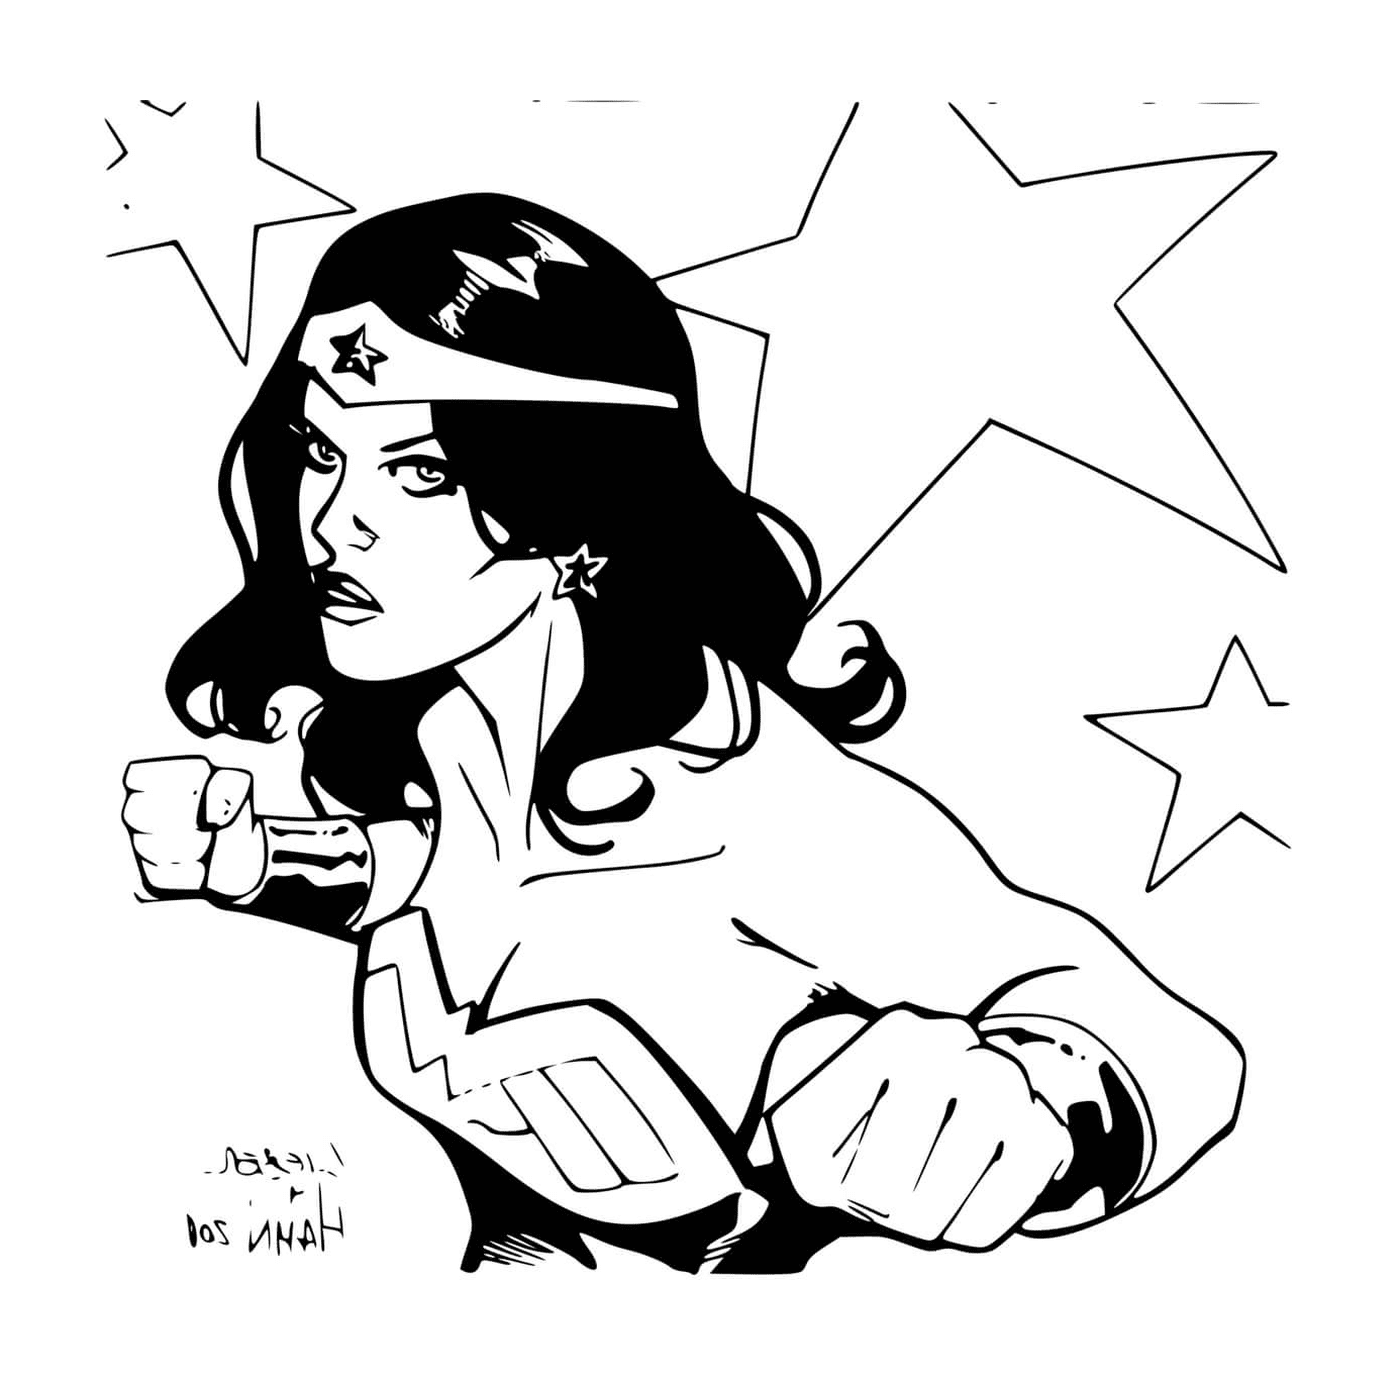  Super heroine Wonder Woman by David Hahn and Steve Liber 